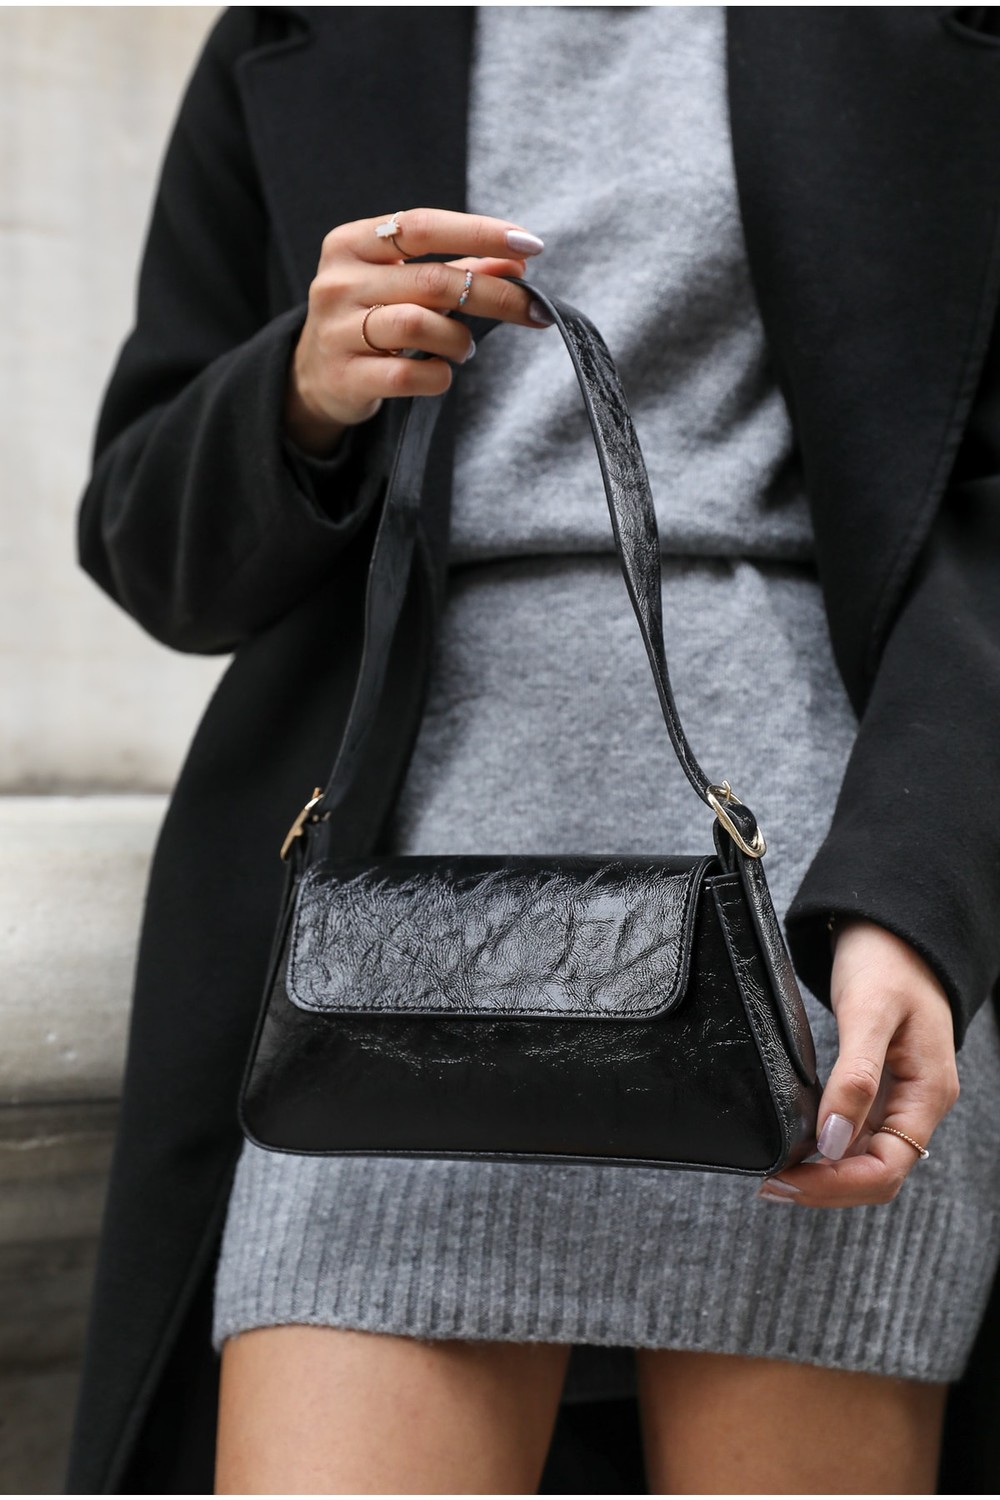 Madamra Black Patent Leather Women's Plain Design Clamshell Handbag.